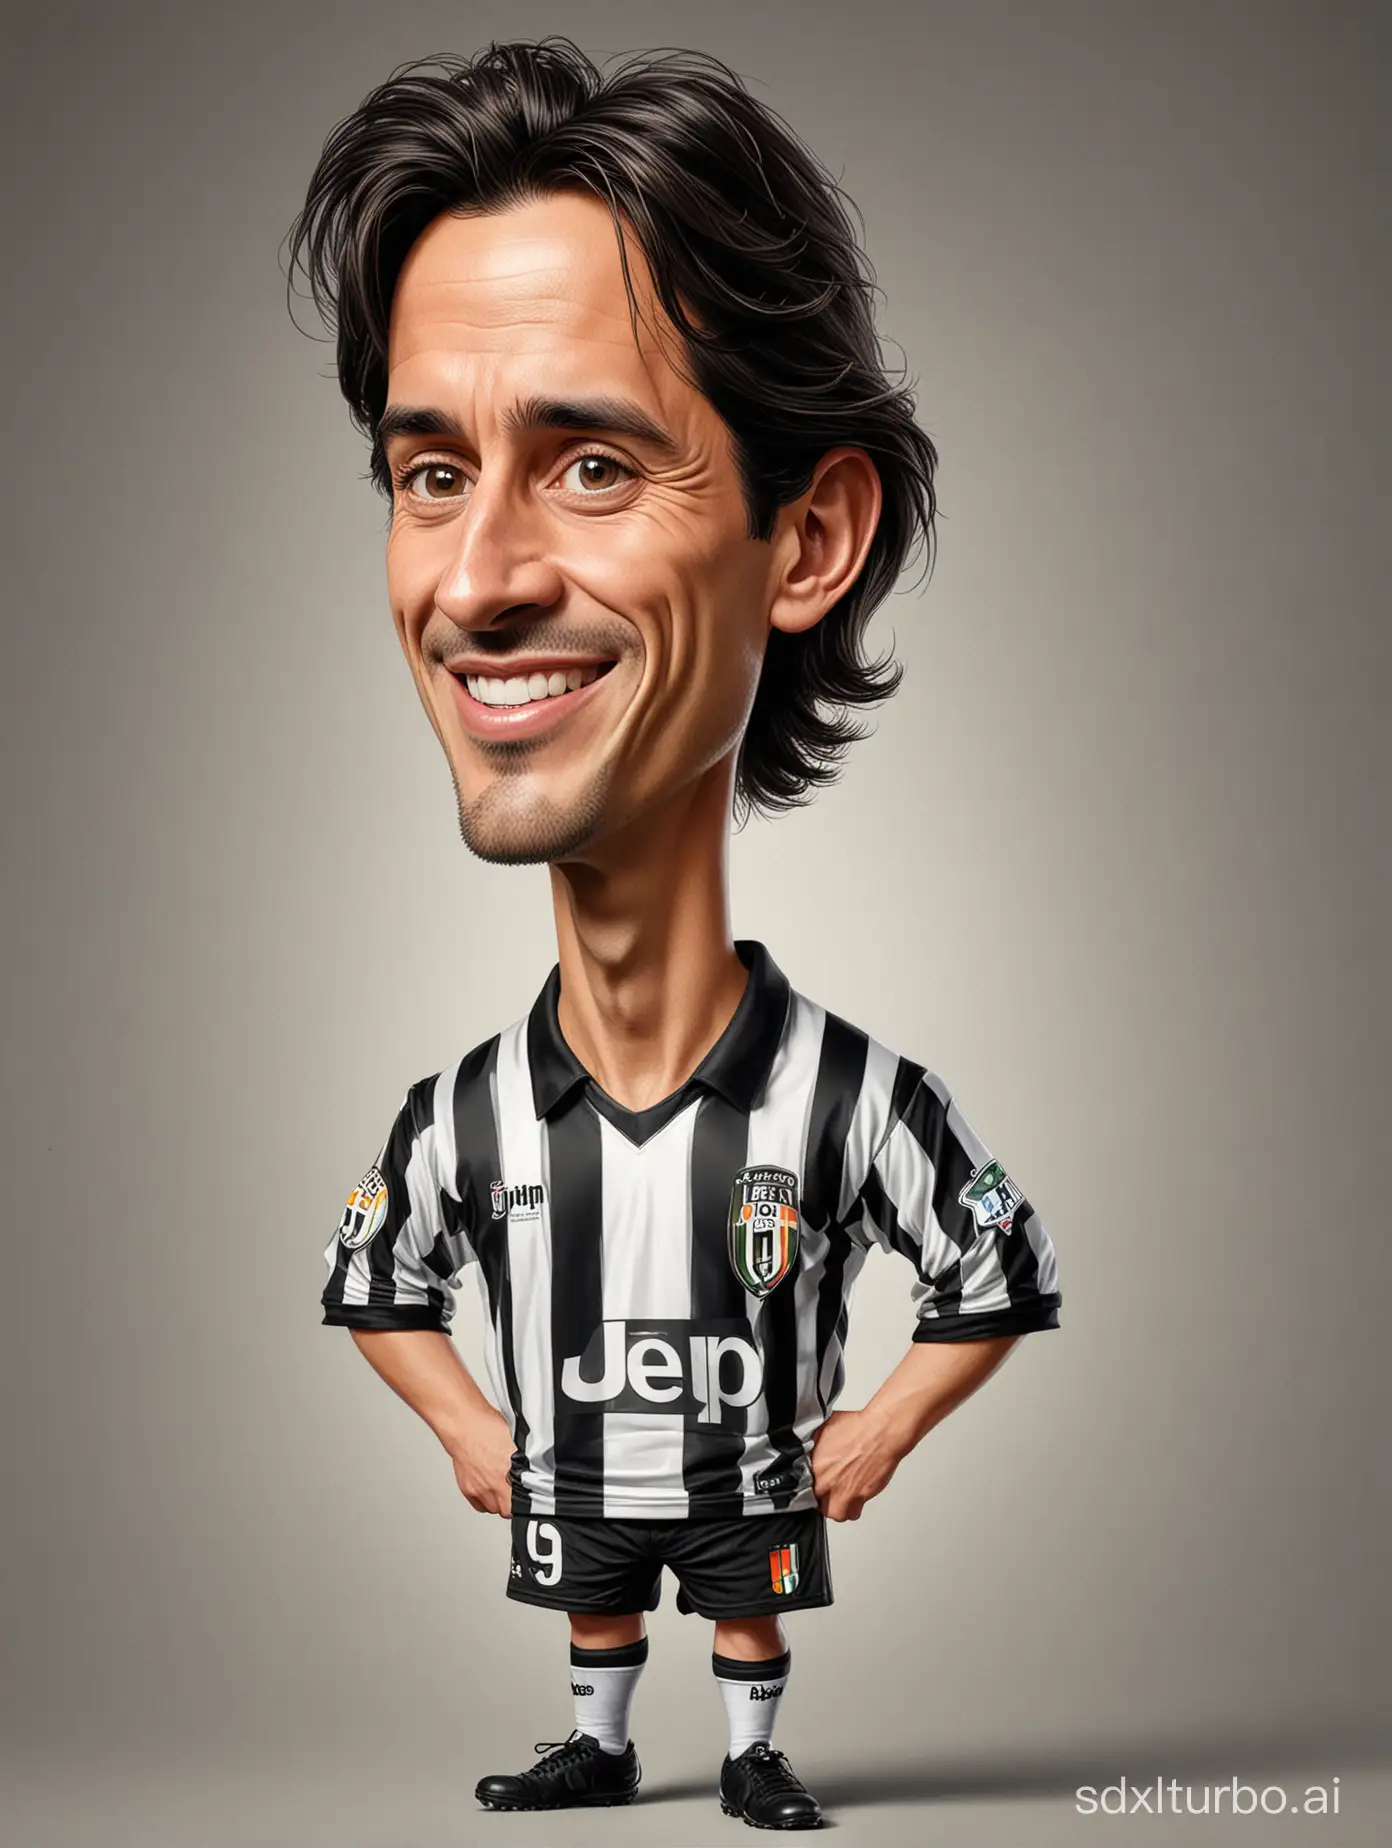 Caricature-Portrait-Inzaghi-in-Juventus-Jersey-19981999-Season